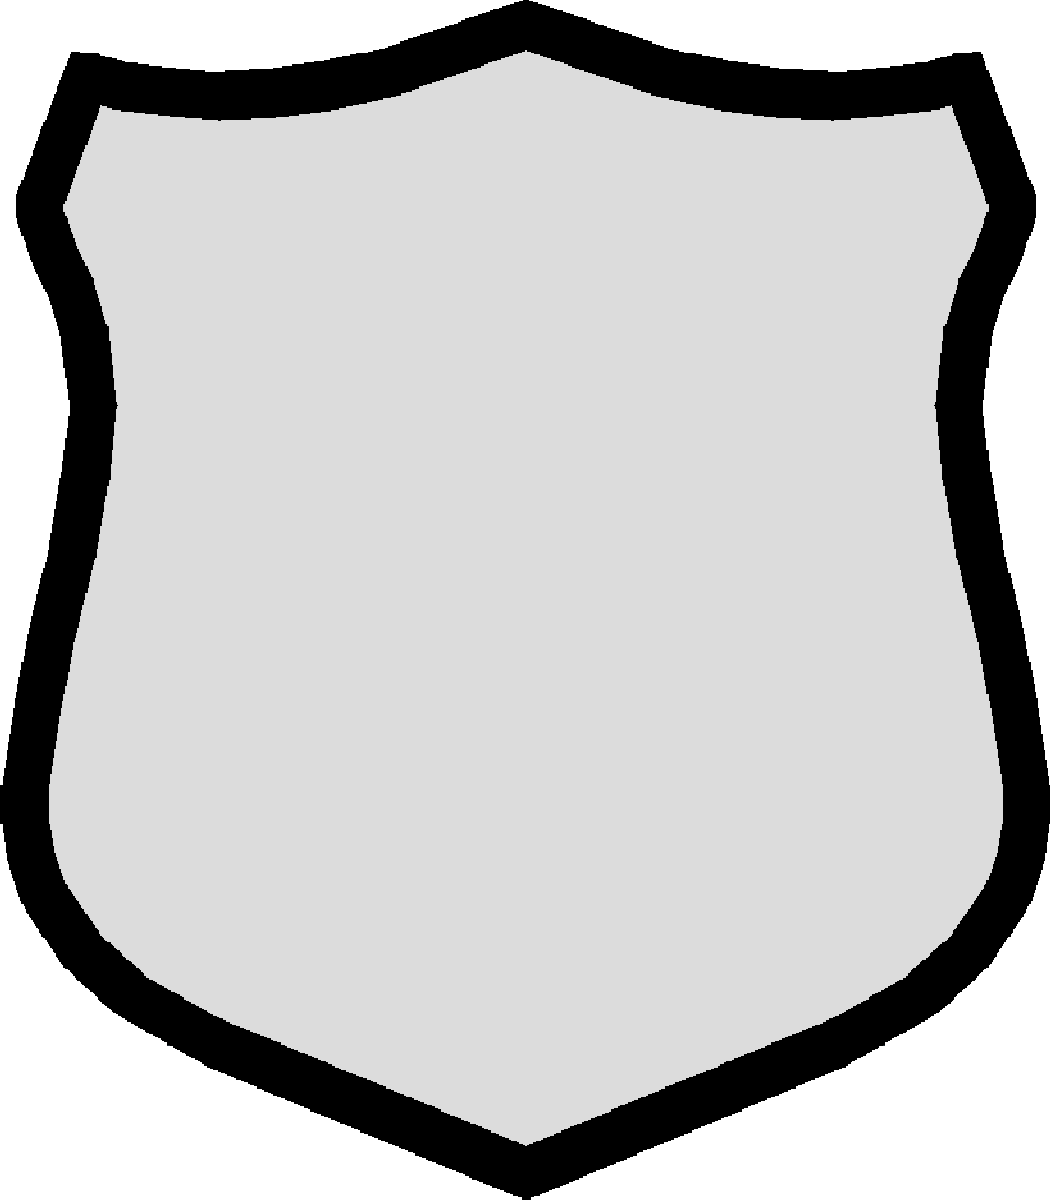 Clipart shield shield shape. Template free download best